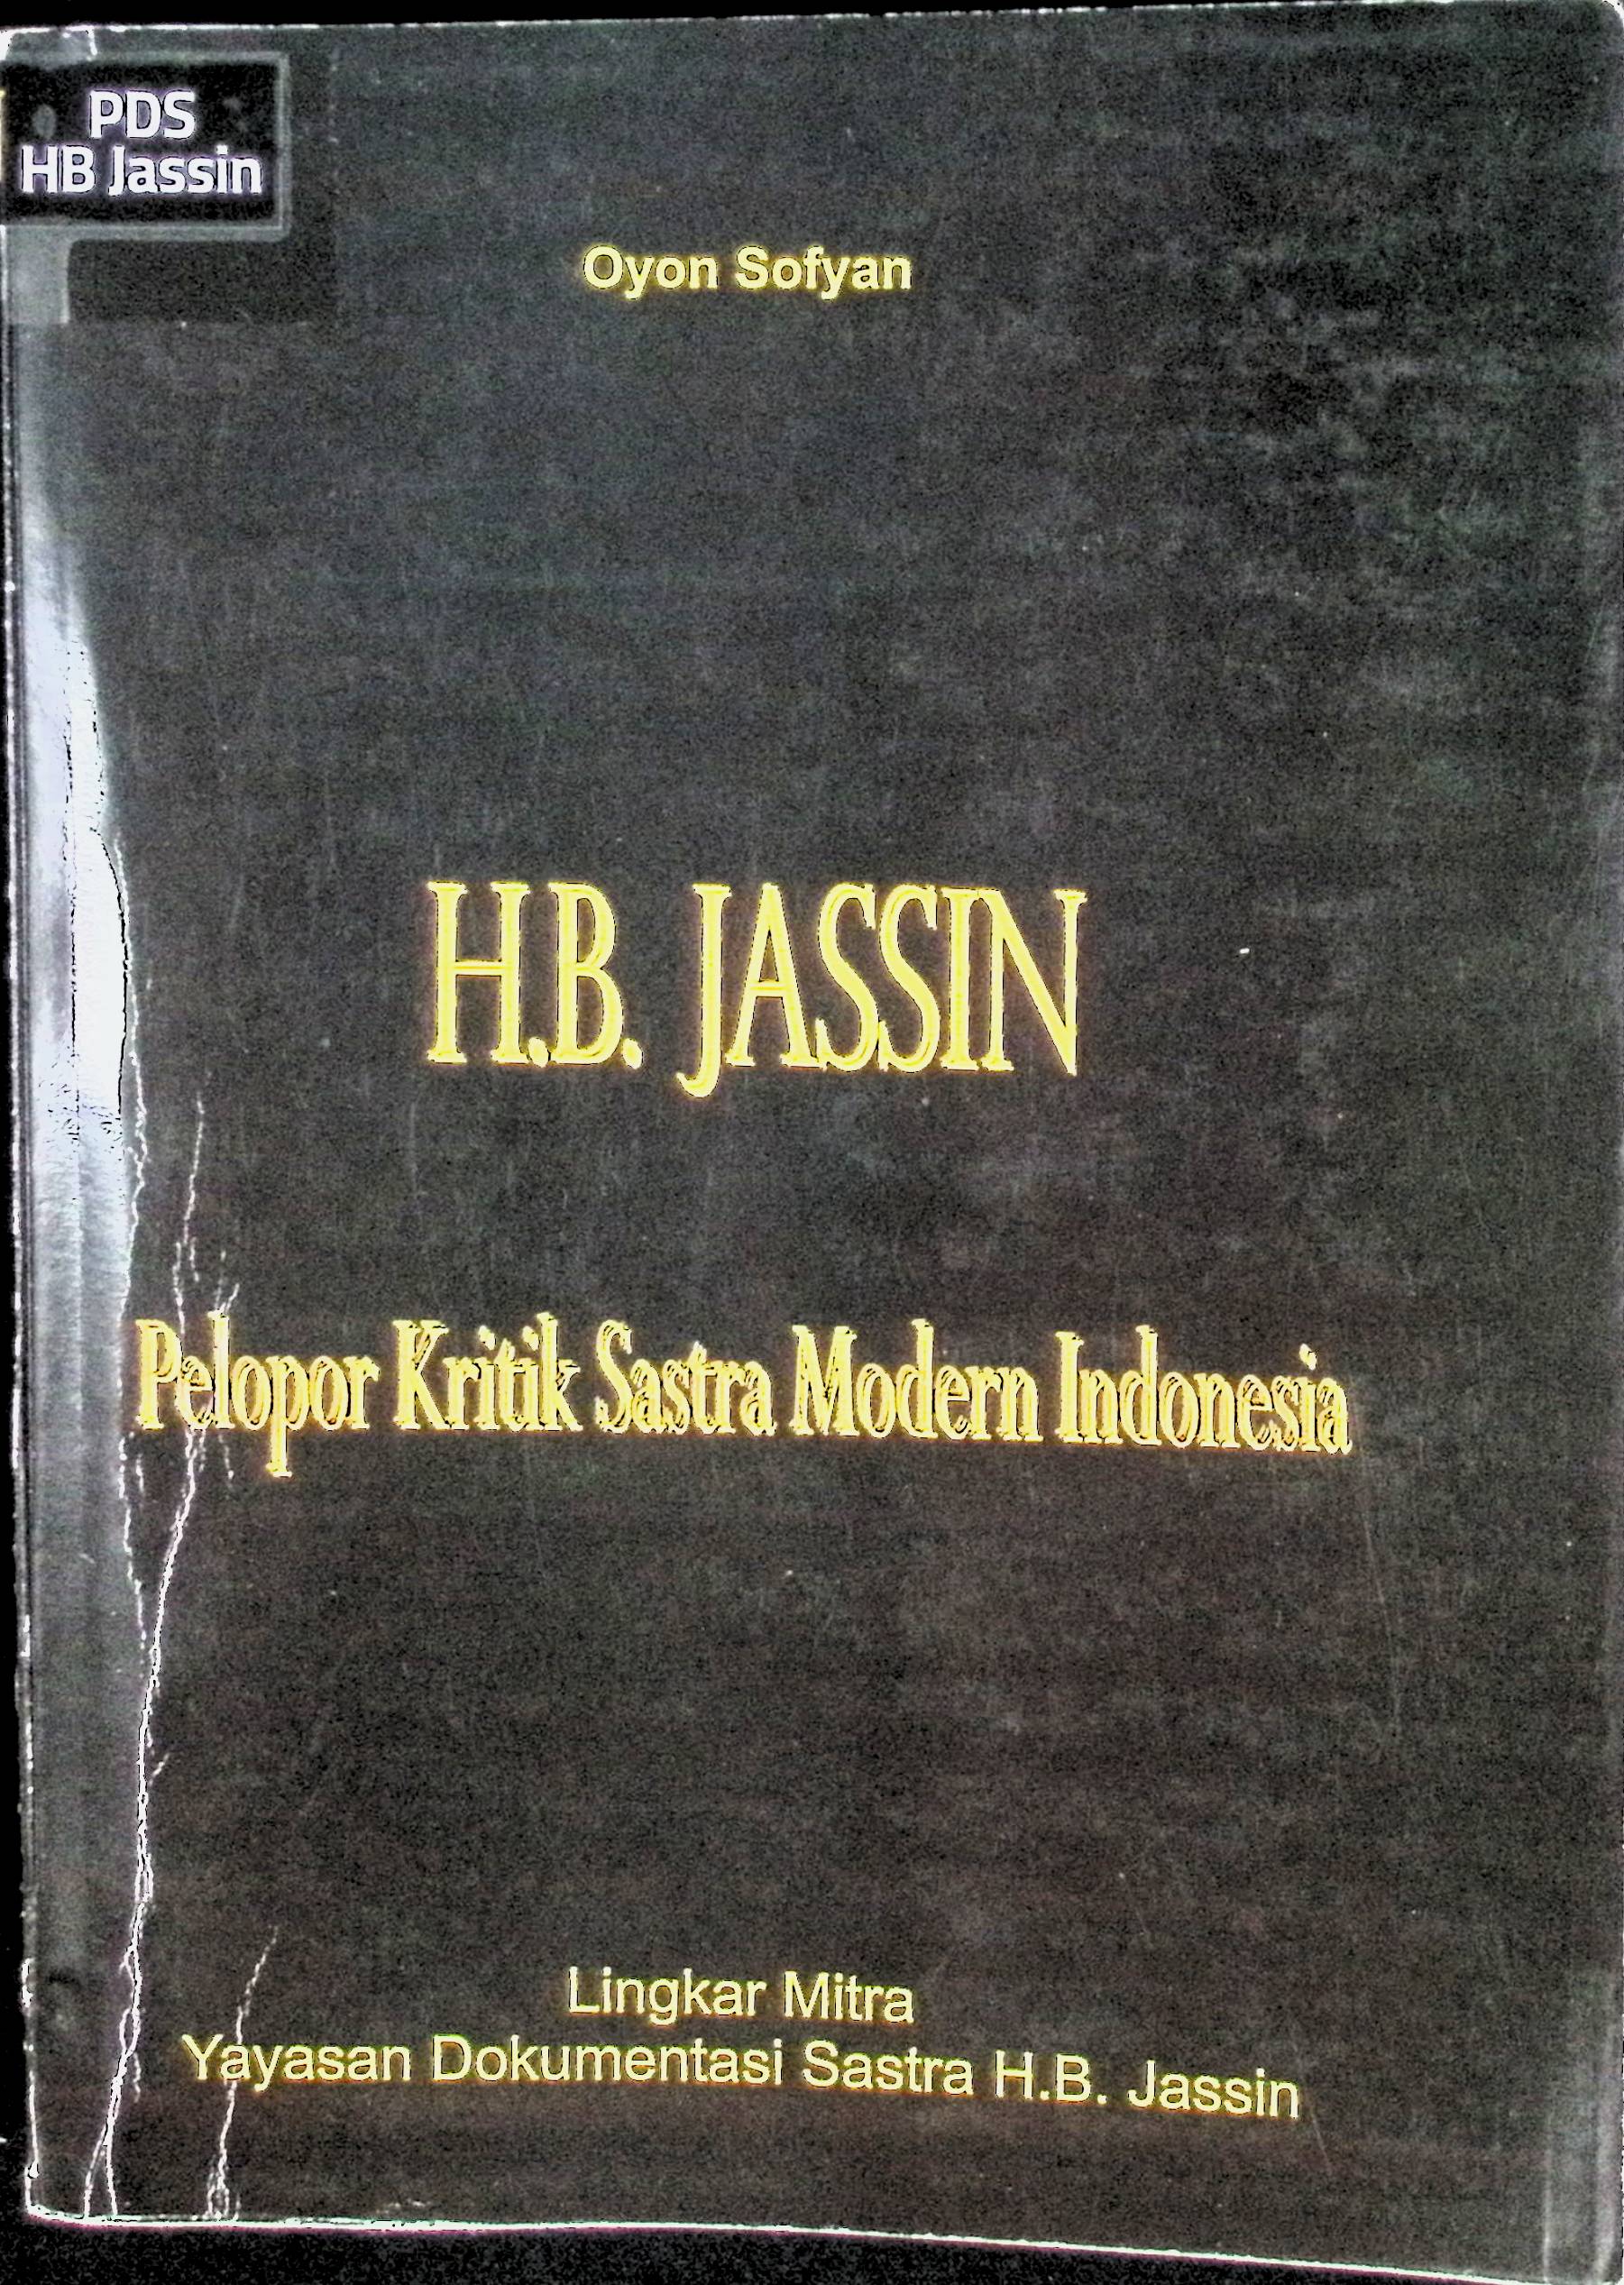 HB Jassin: Pelopor Kritik Sastra Modern Indonesia